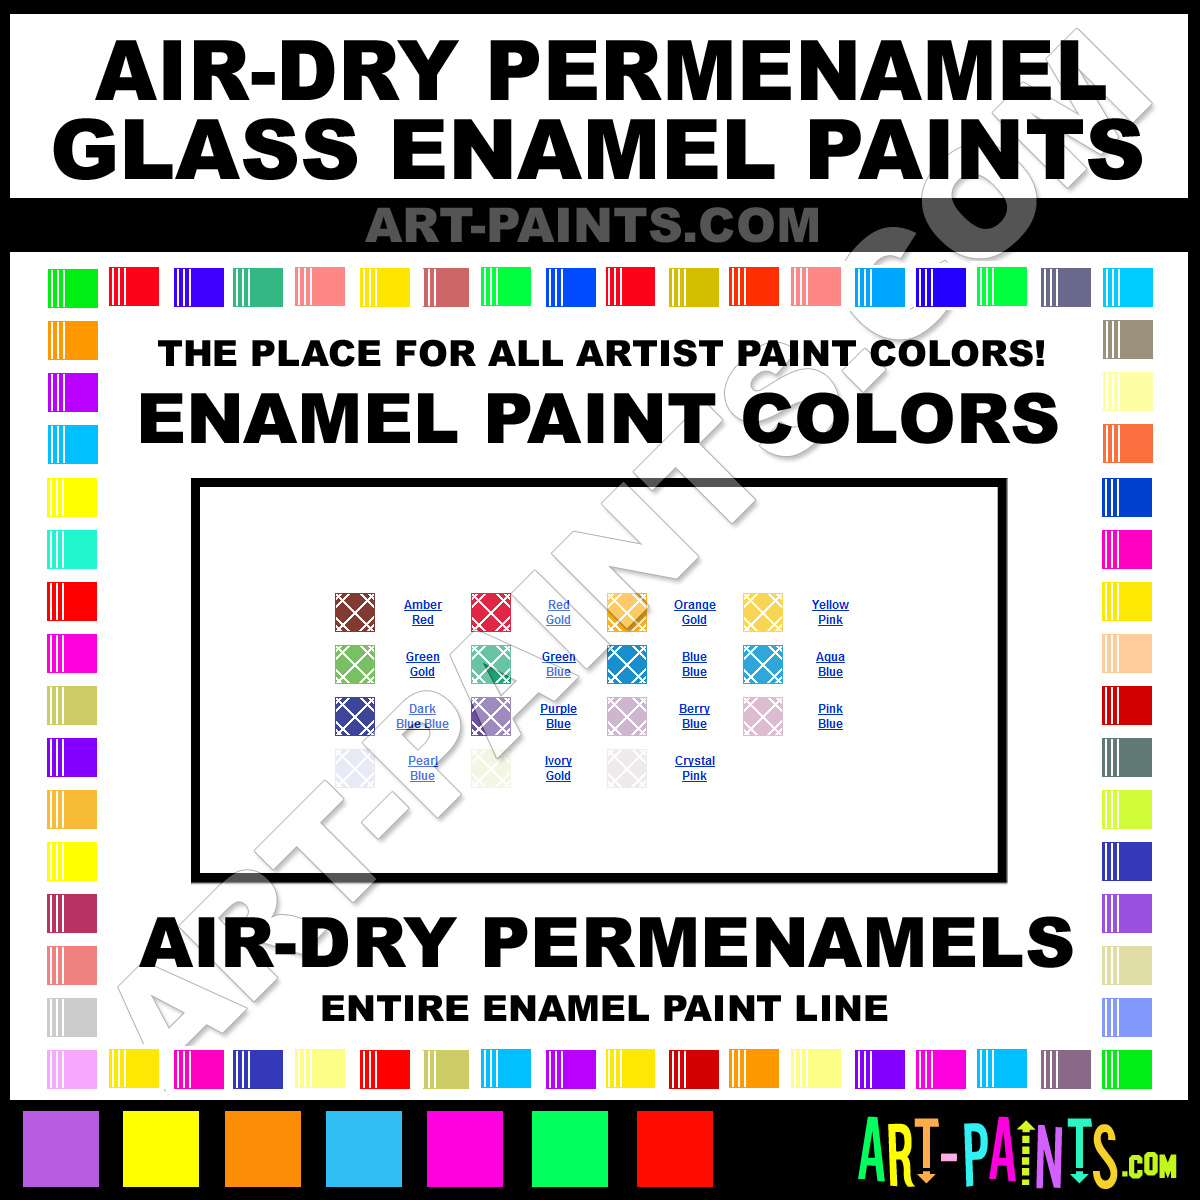 Glass enamel Glass  glass PermEnamel Paints with PermEnamel paint Enamels  painting